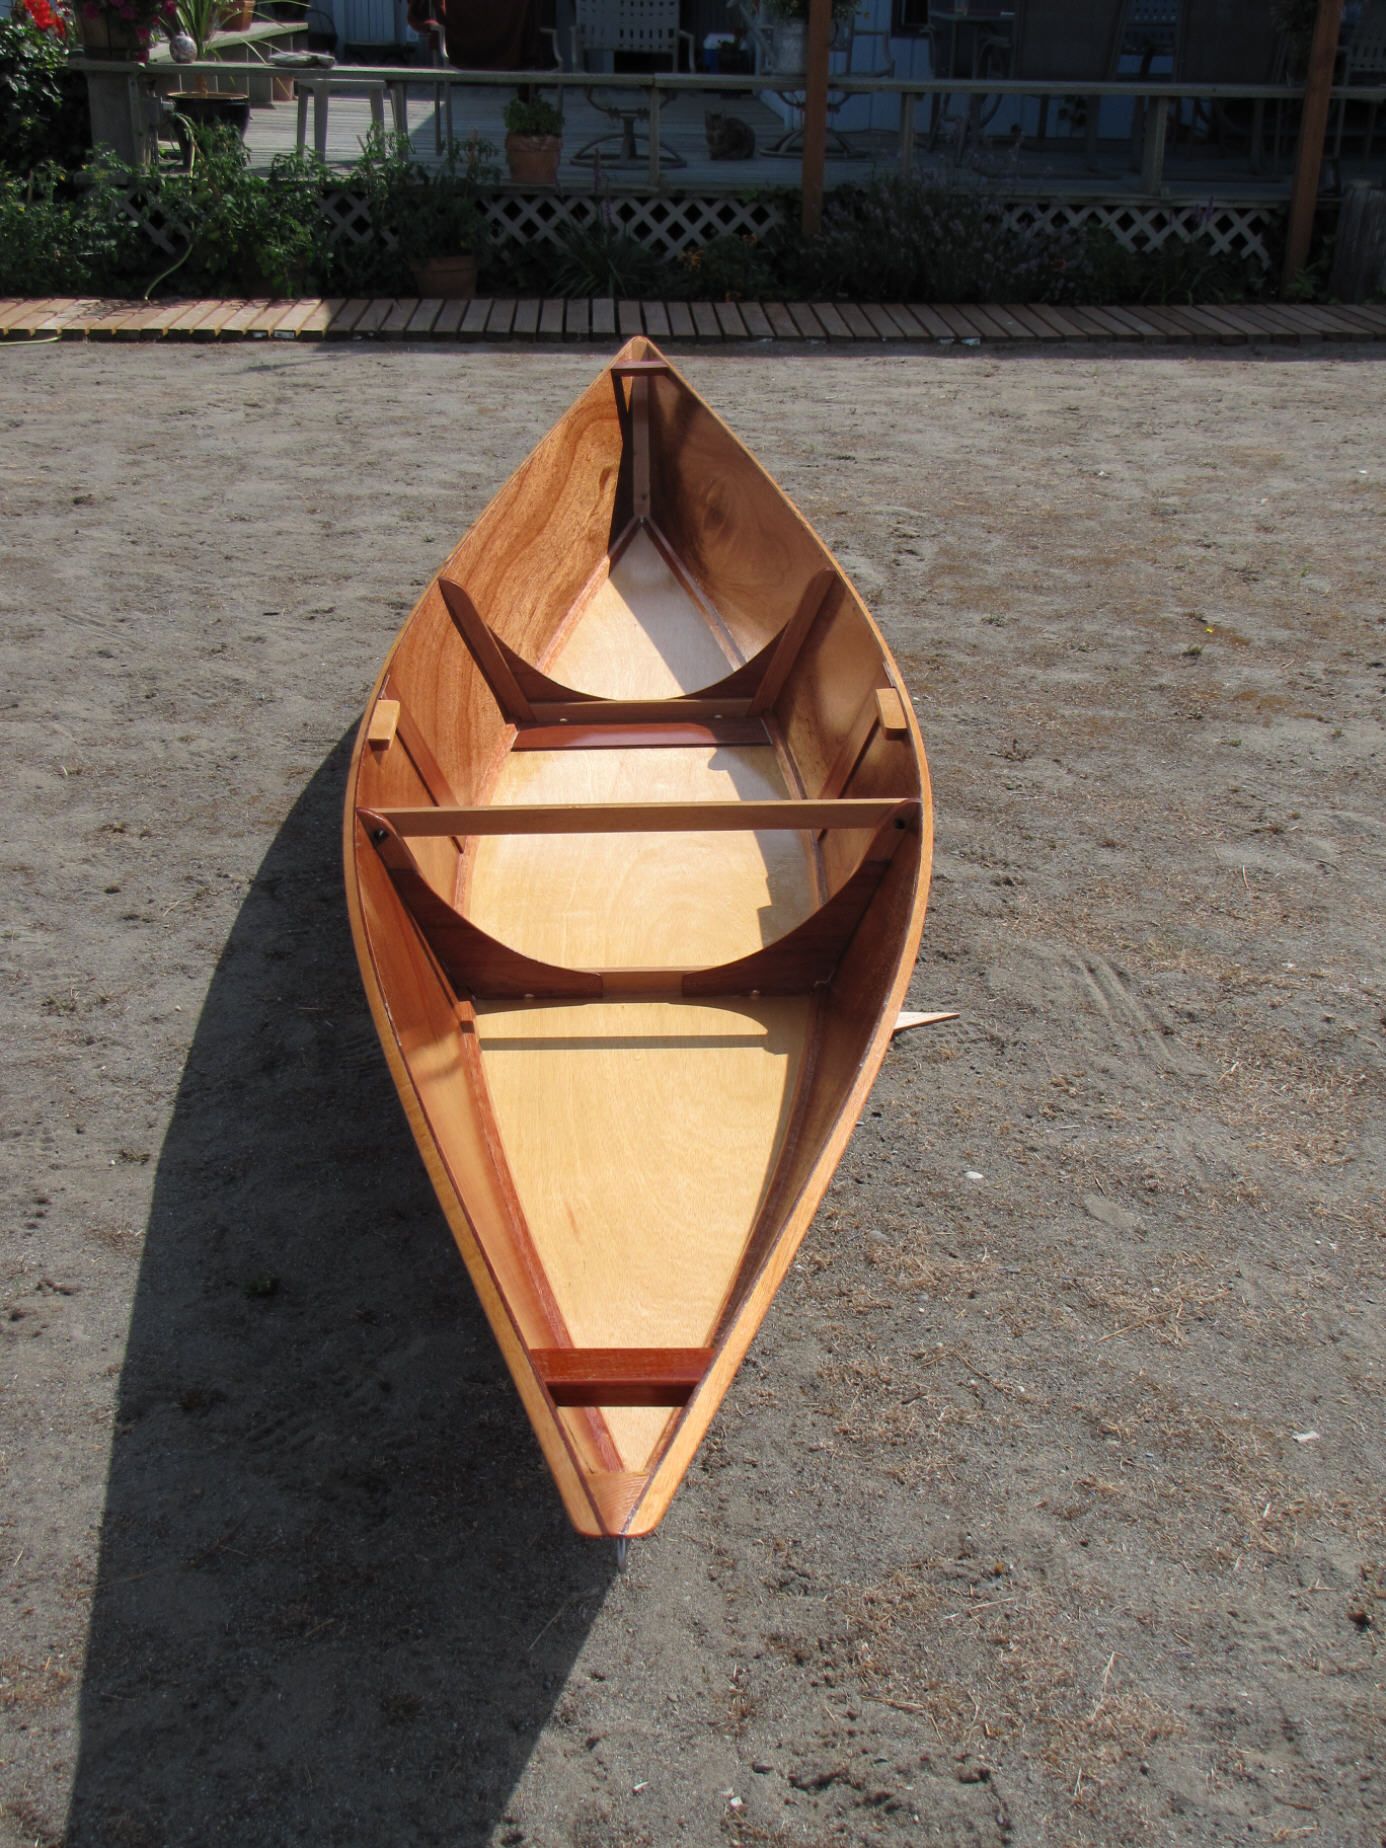 canoe clipart pirogue